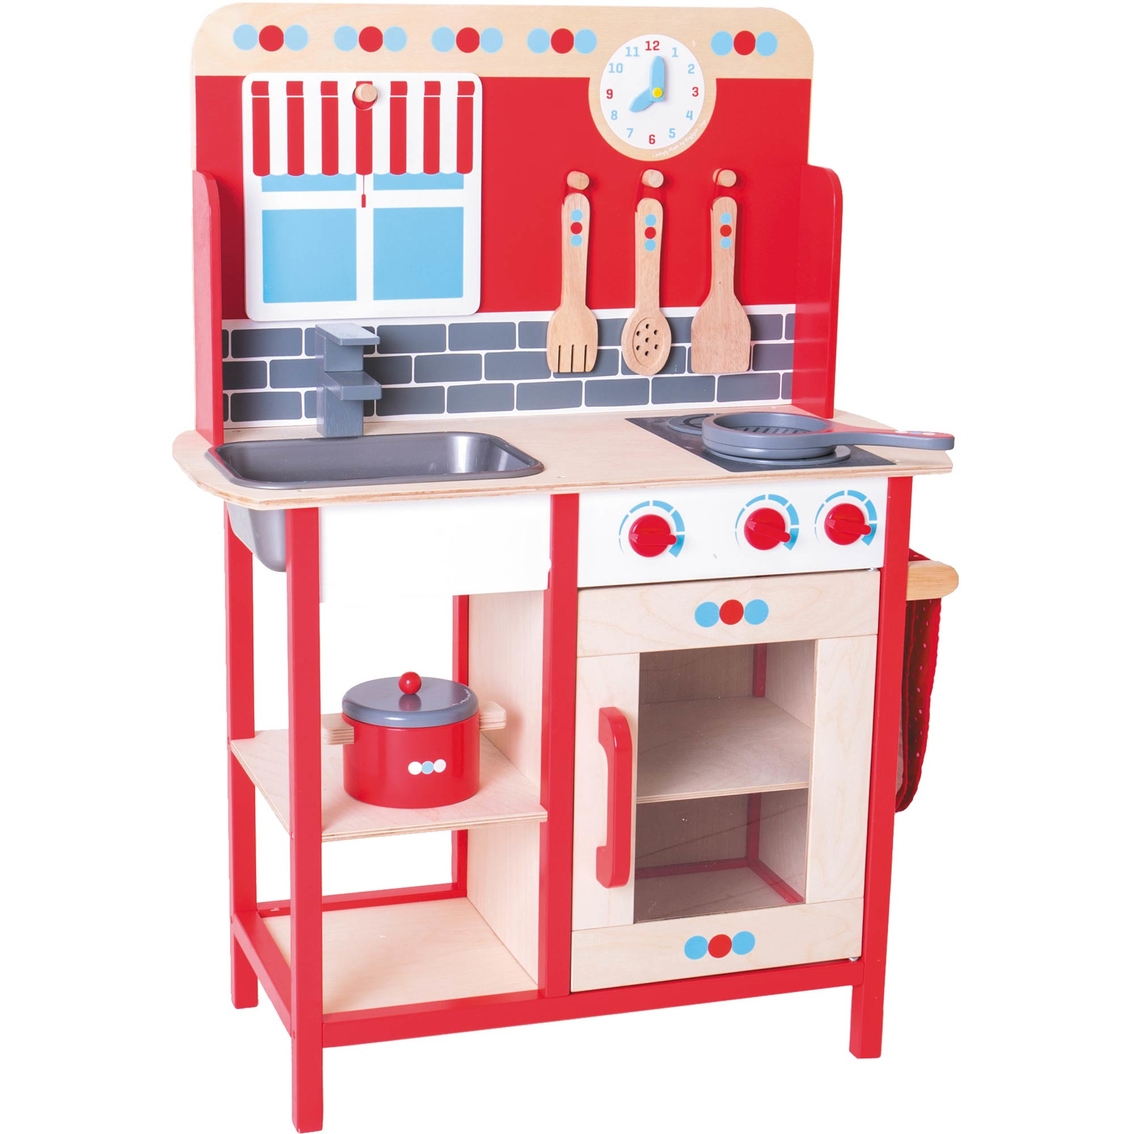 BigJigs Toys Play Kitchen - Image 2 of 2